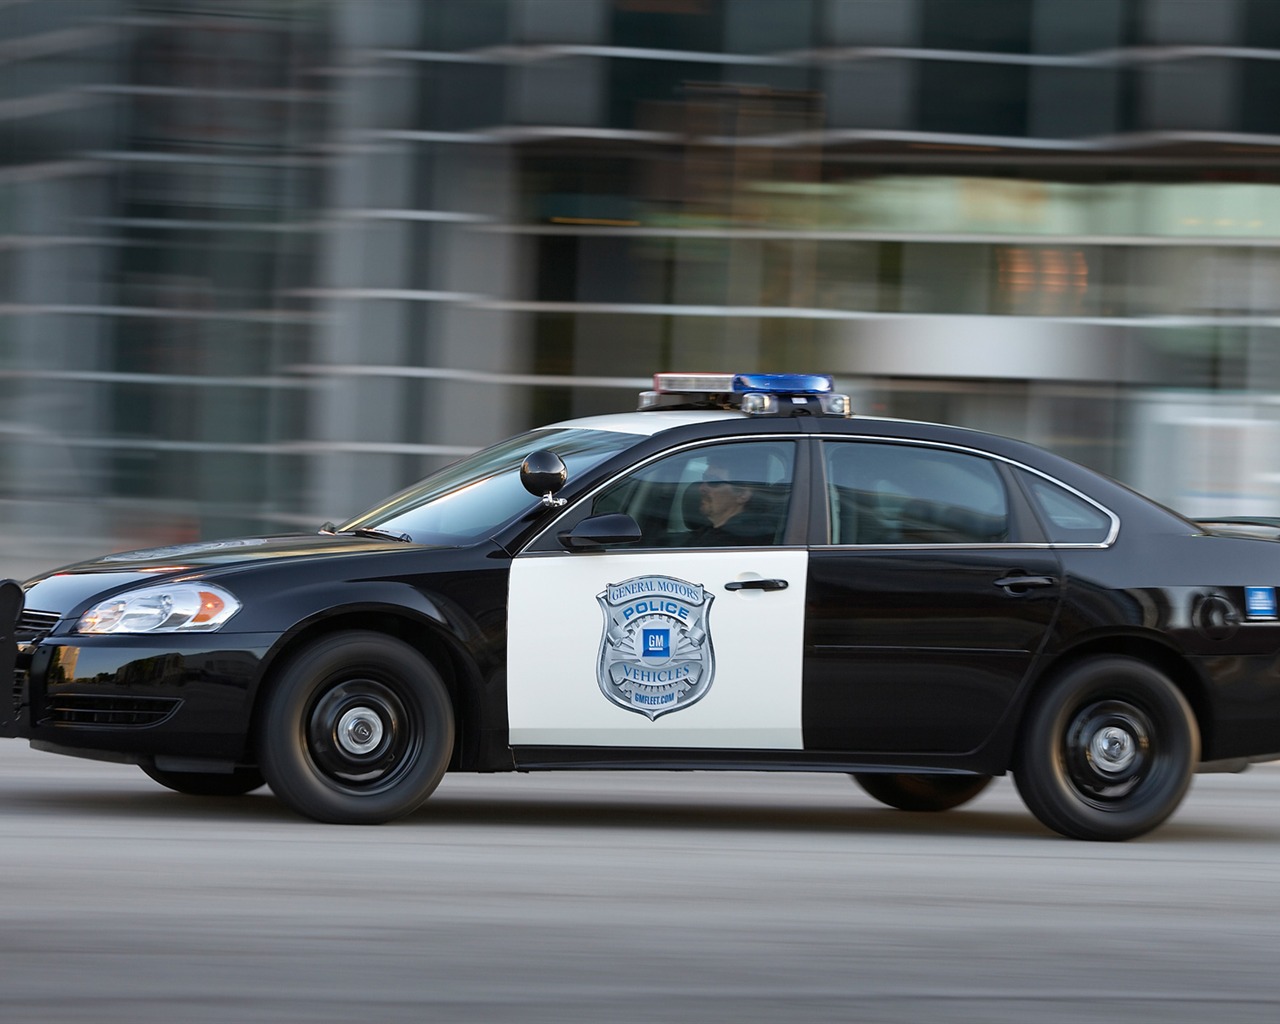 Chevrolet Impala Police Vehicle - 2011 雪佛兰5 - 1280x1024